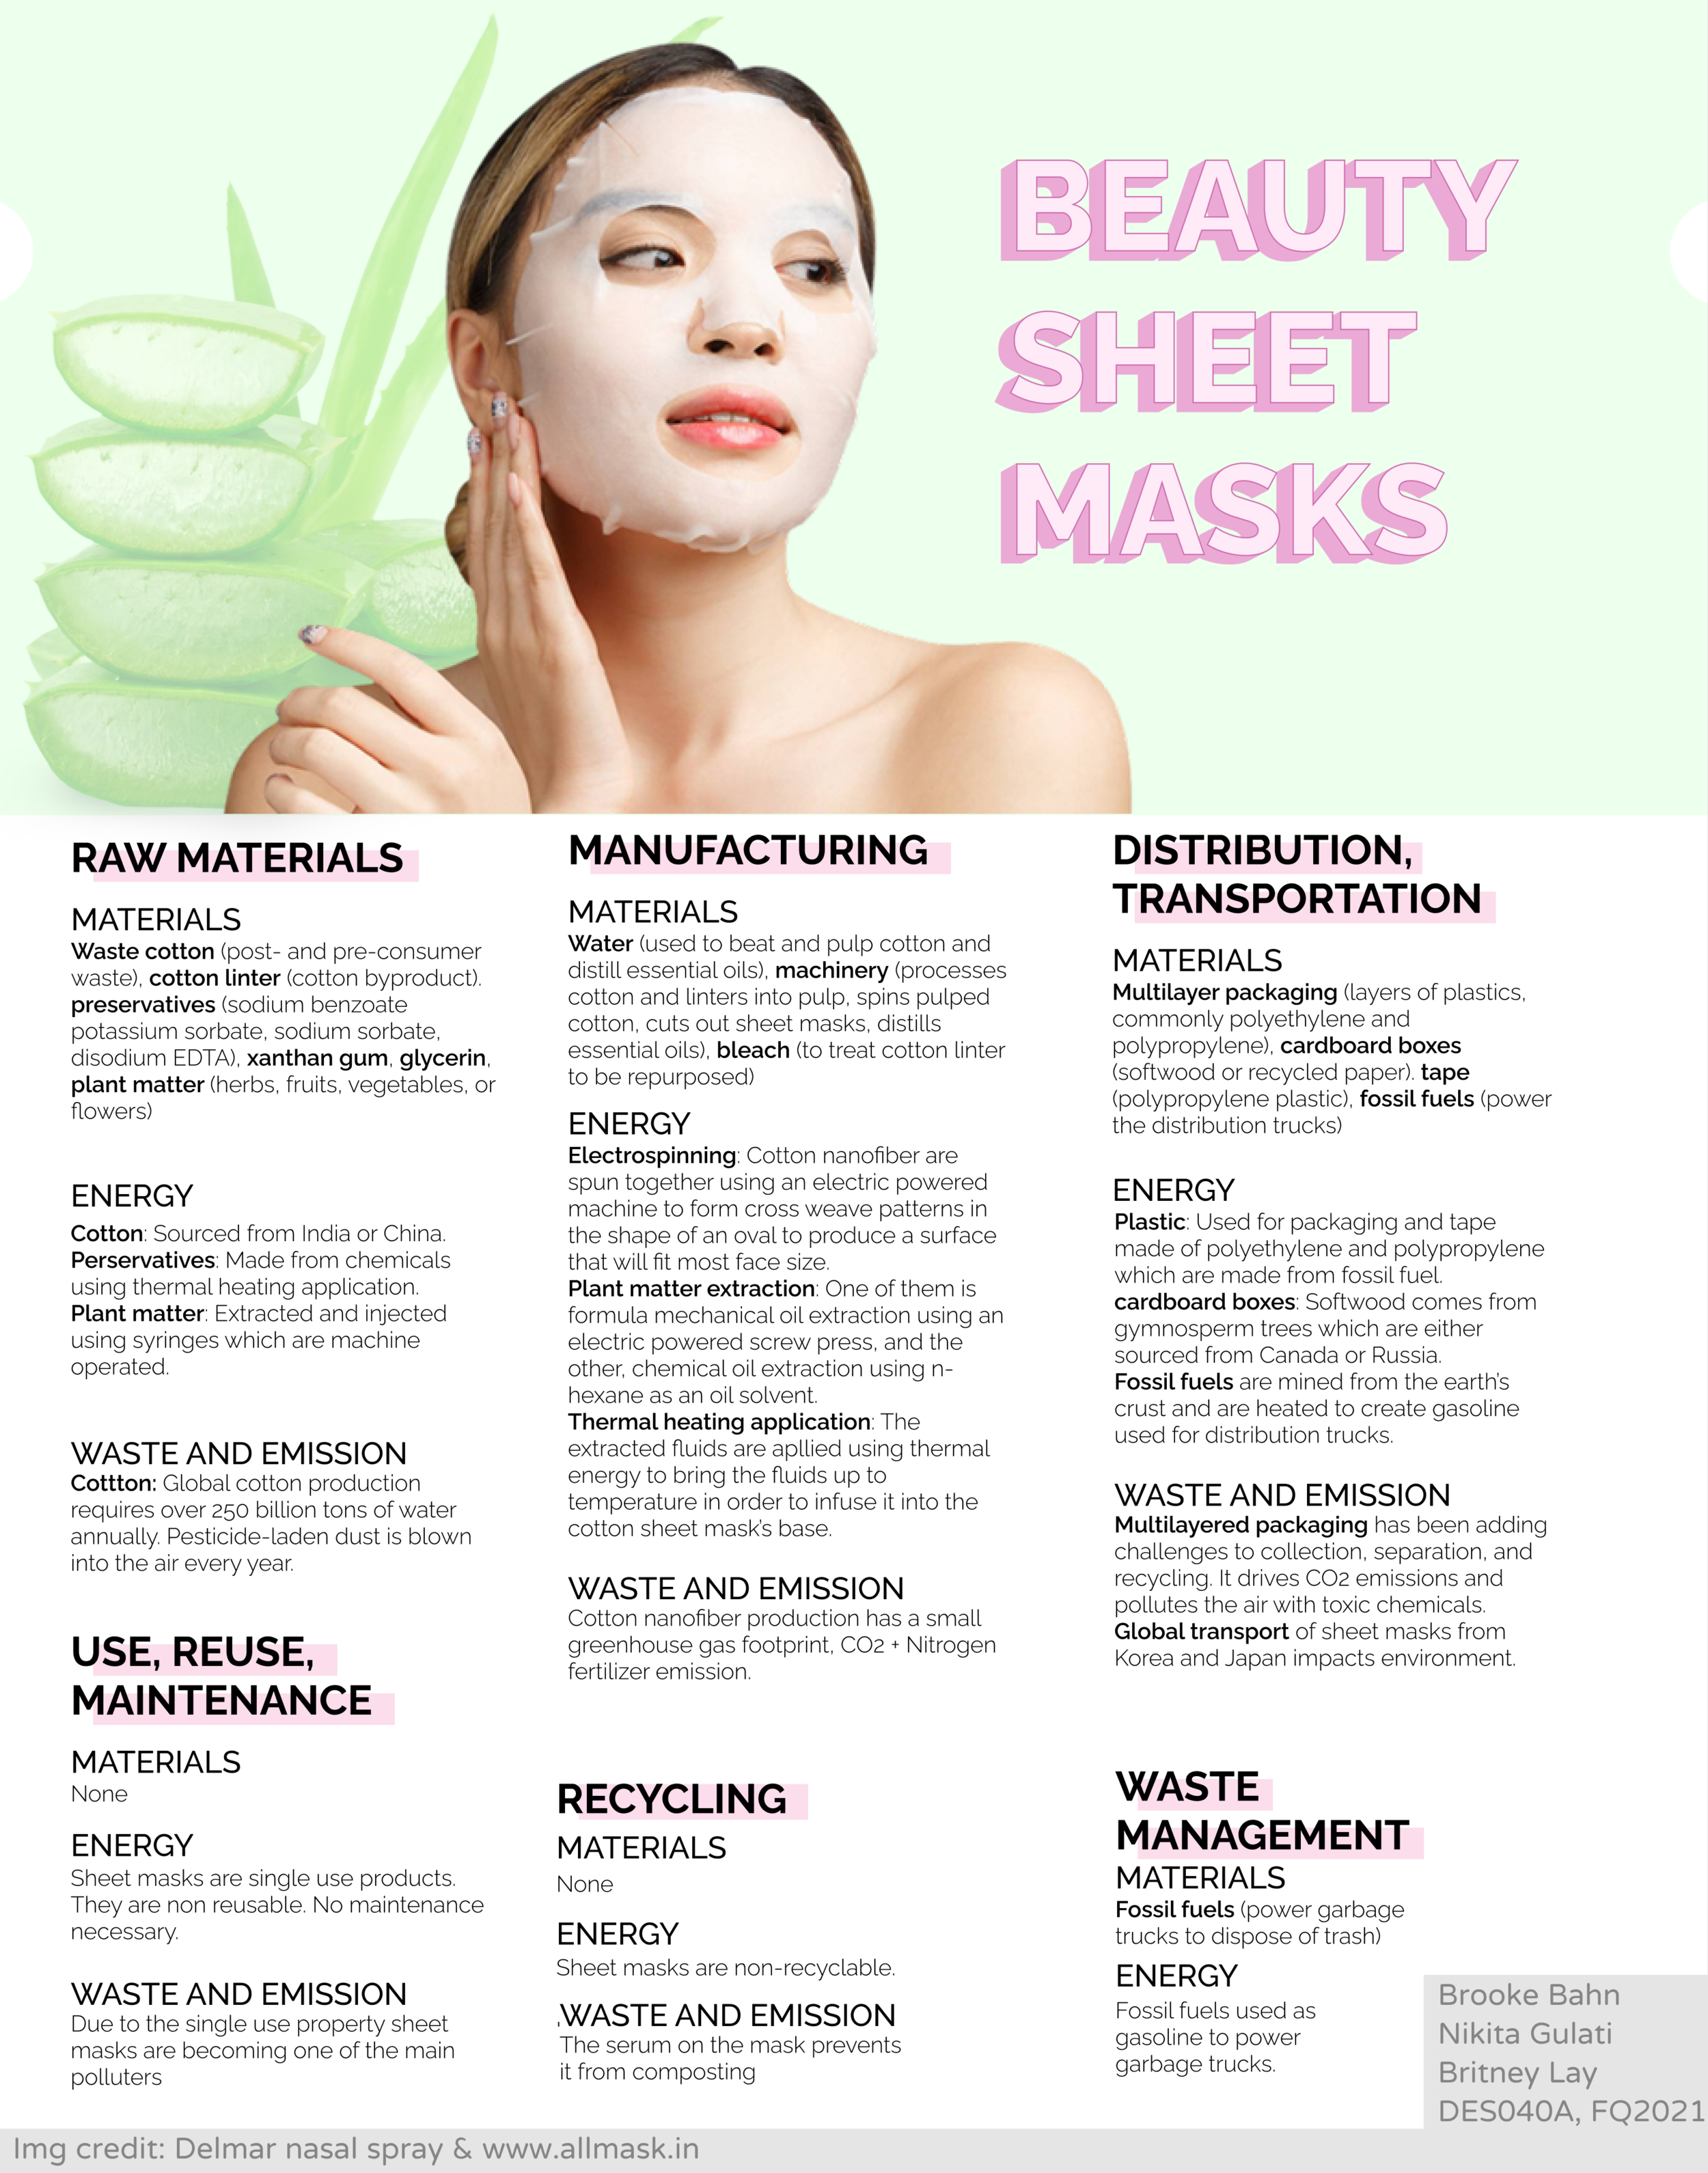 Beauty Sheet Mask — Design Life-Cycle